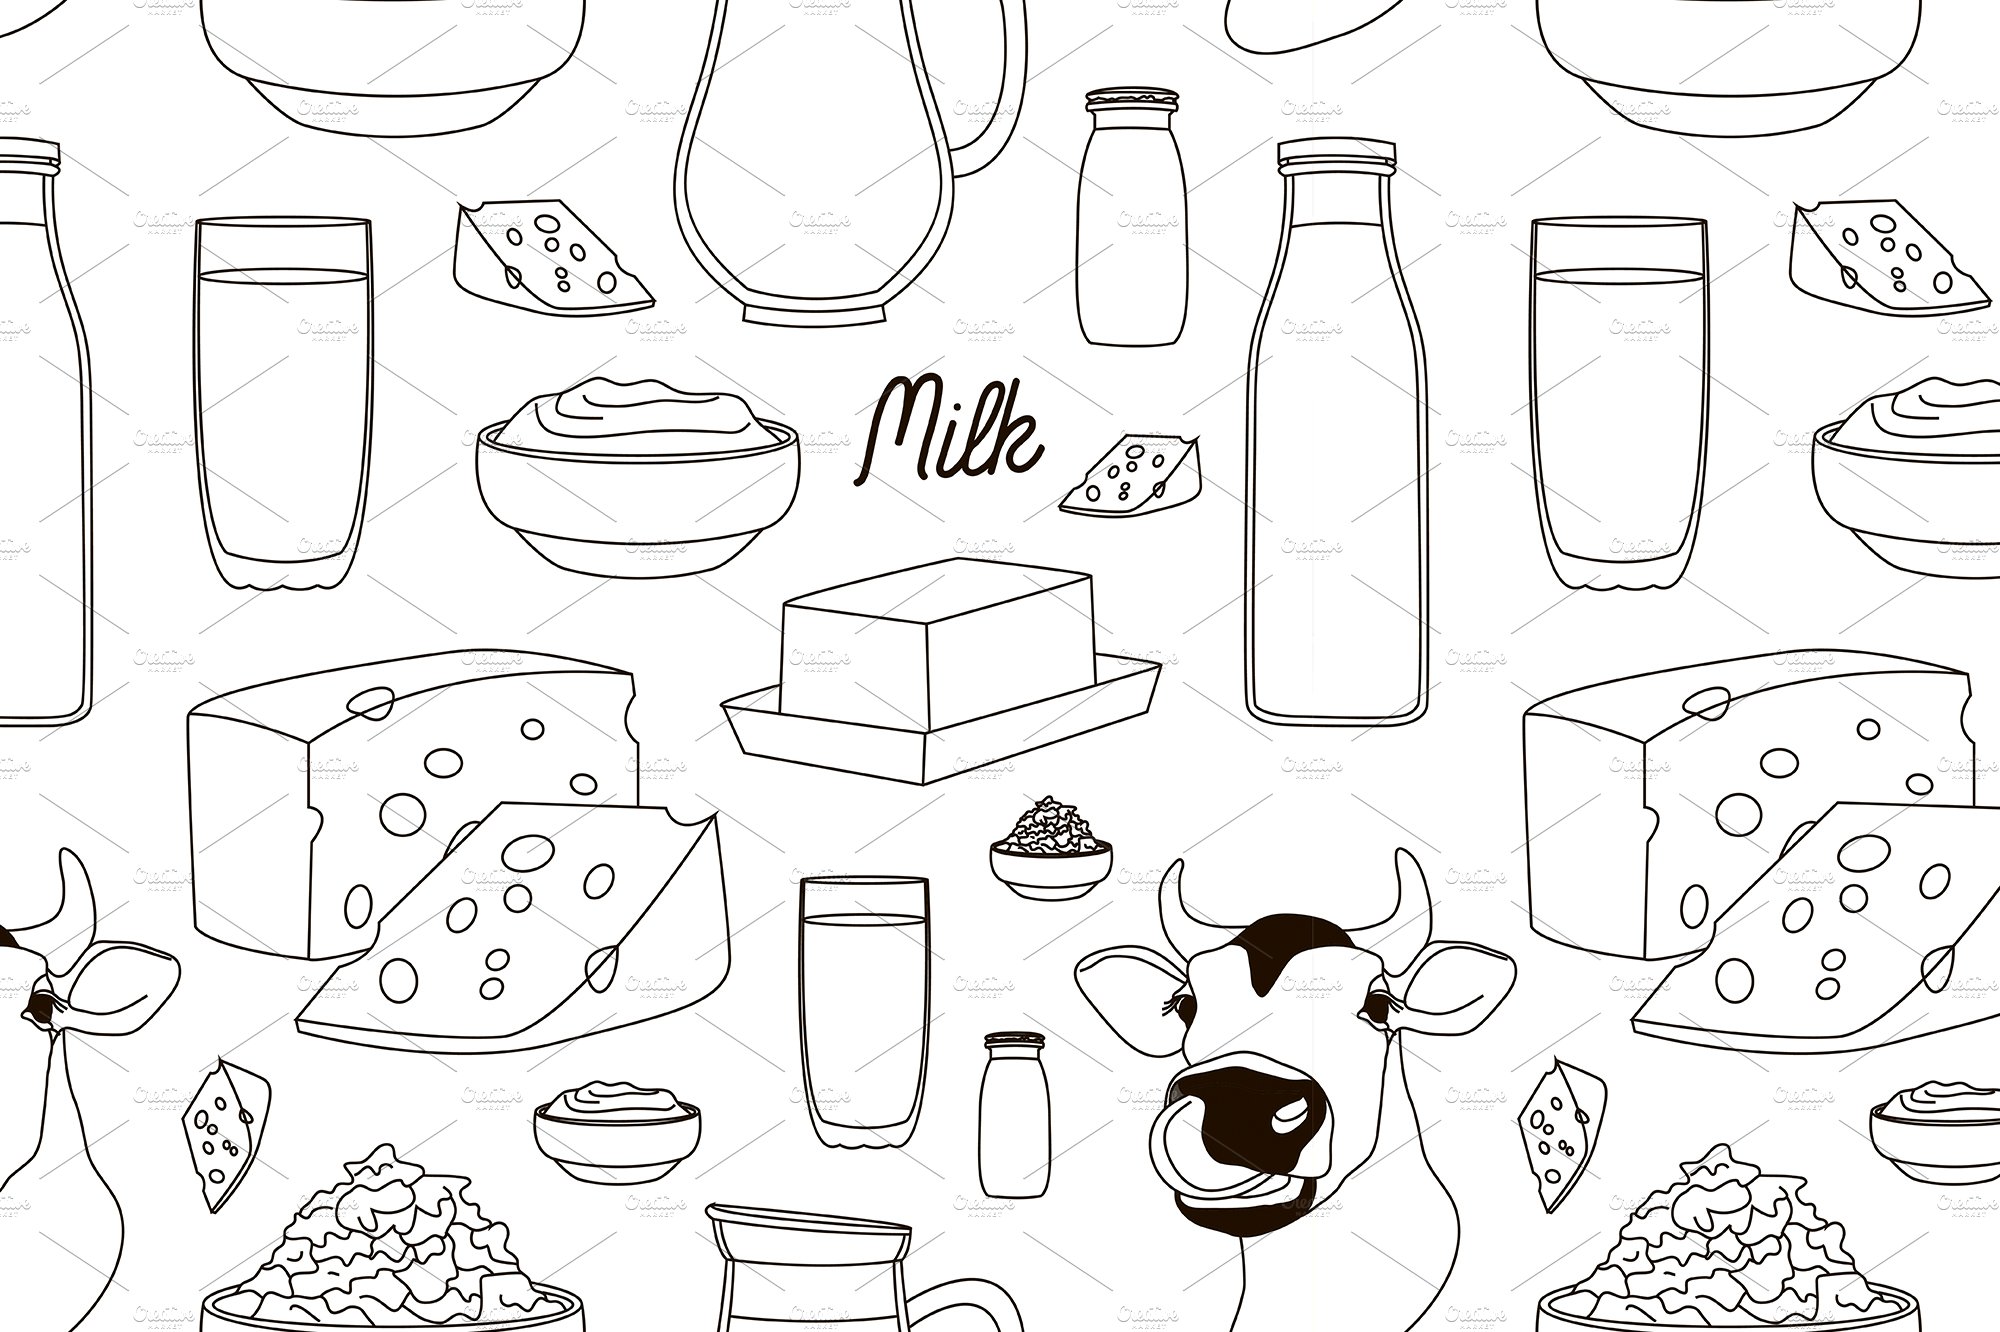 Milk set pattern cover image.